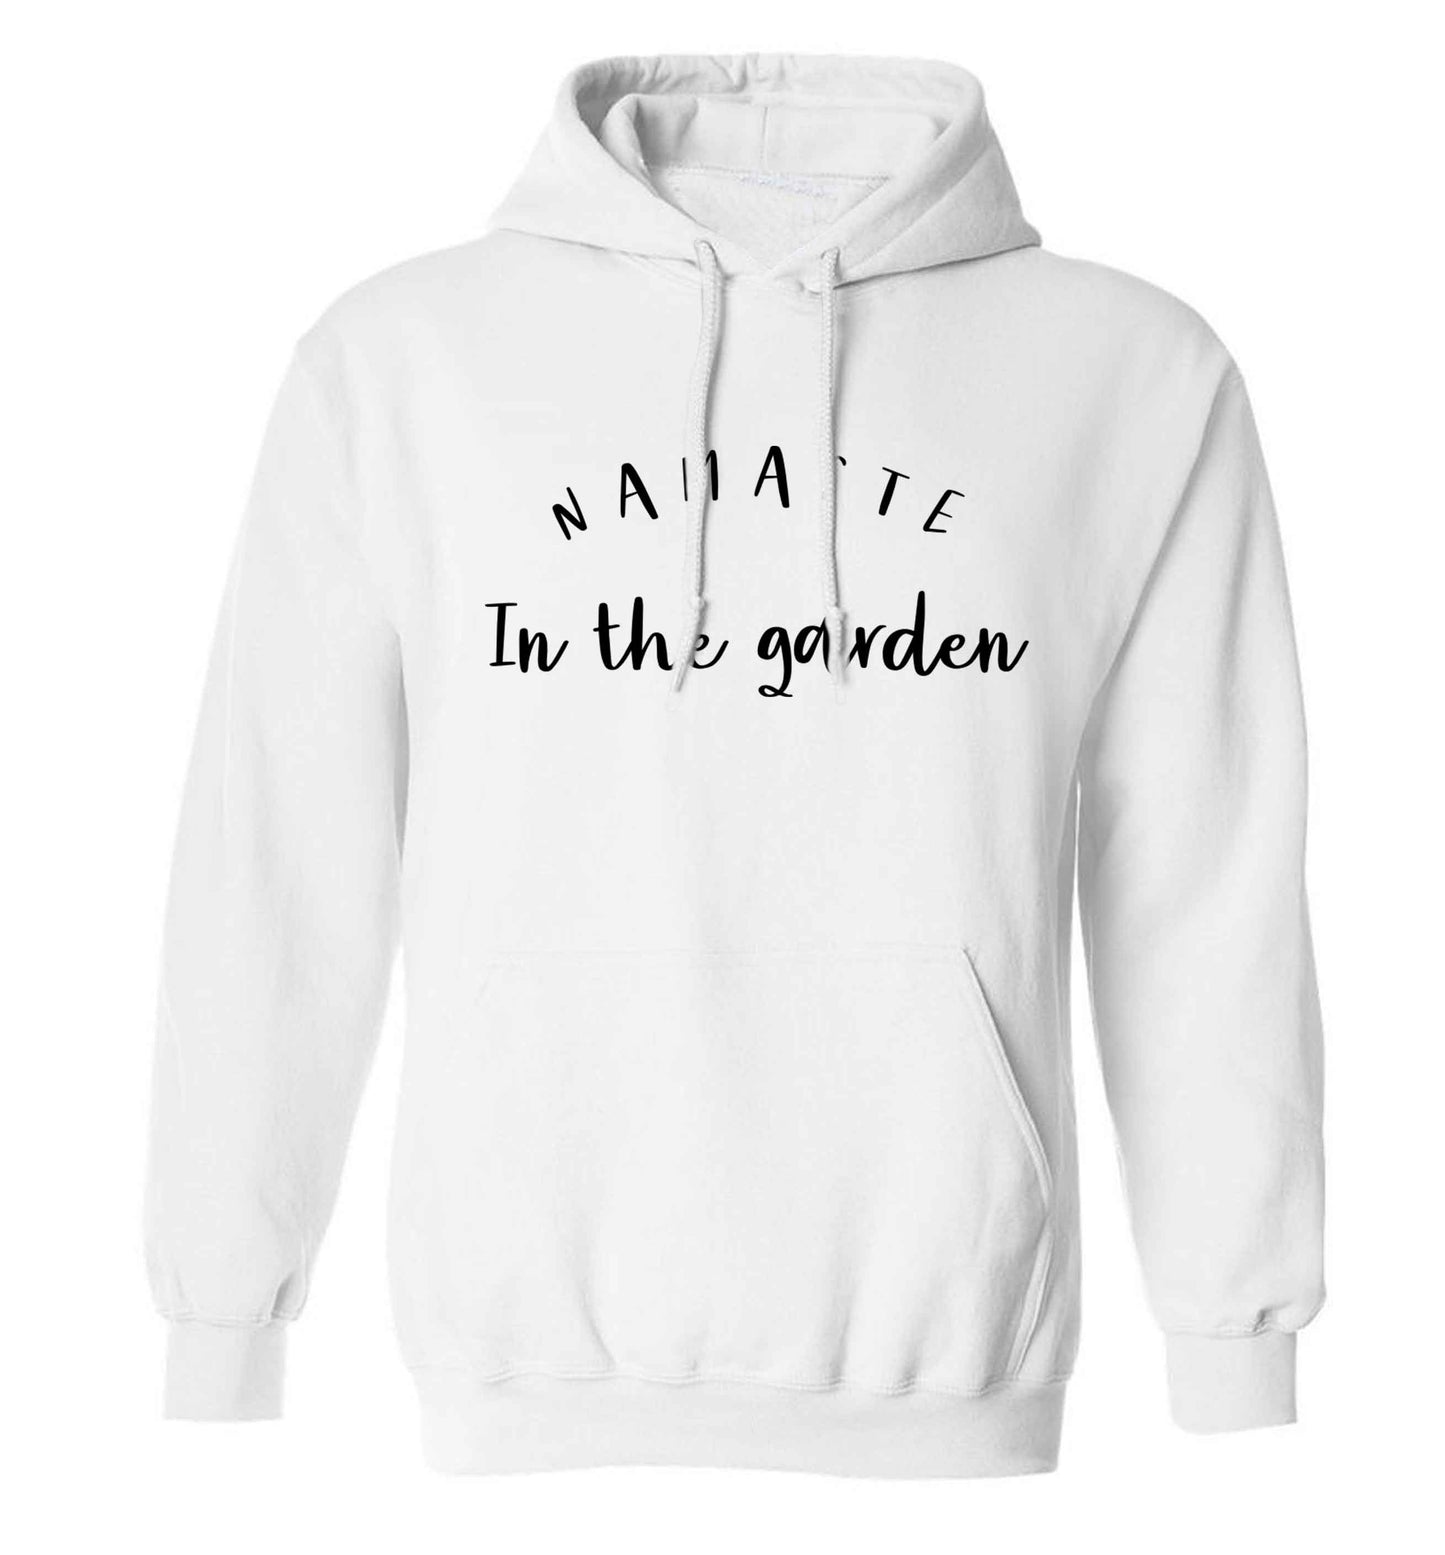 Namaste in the garden adults unisex white hoodie 2XL